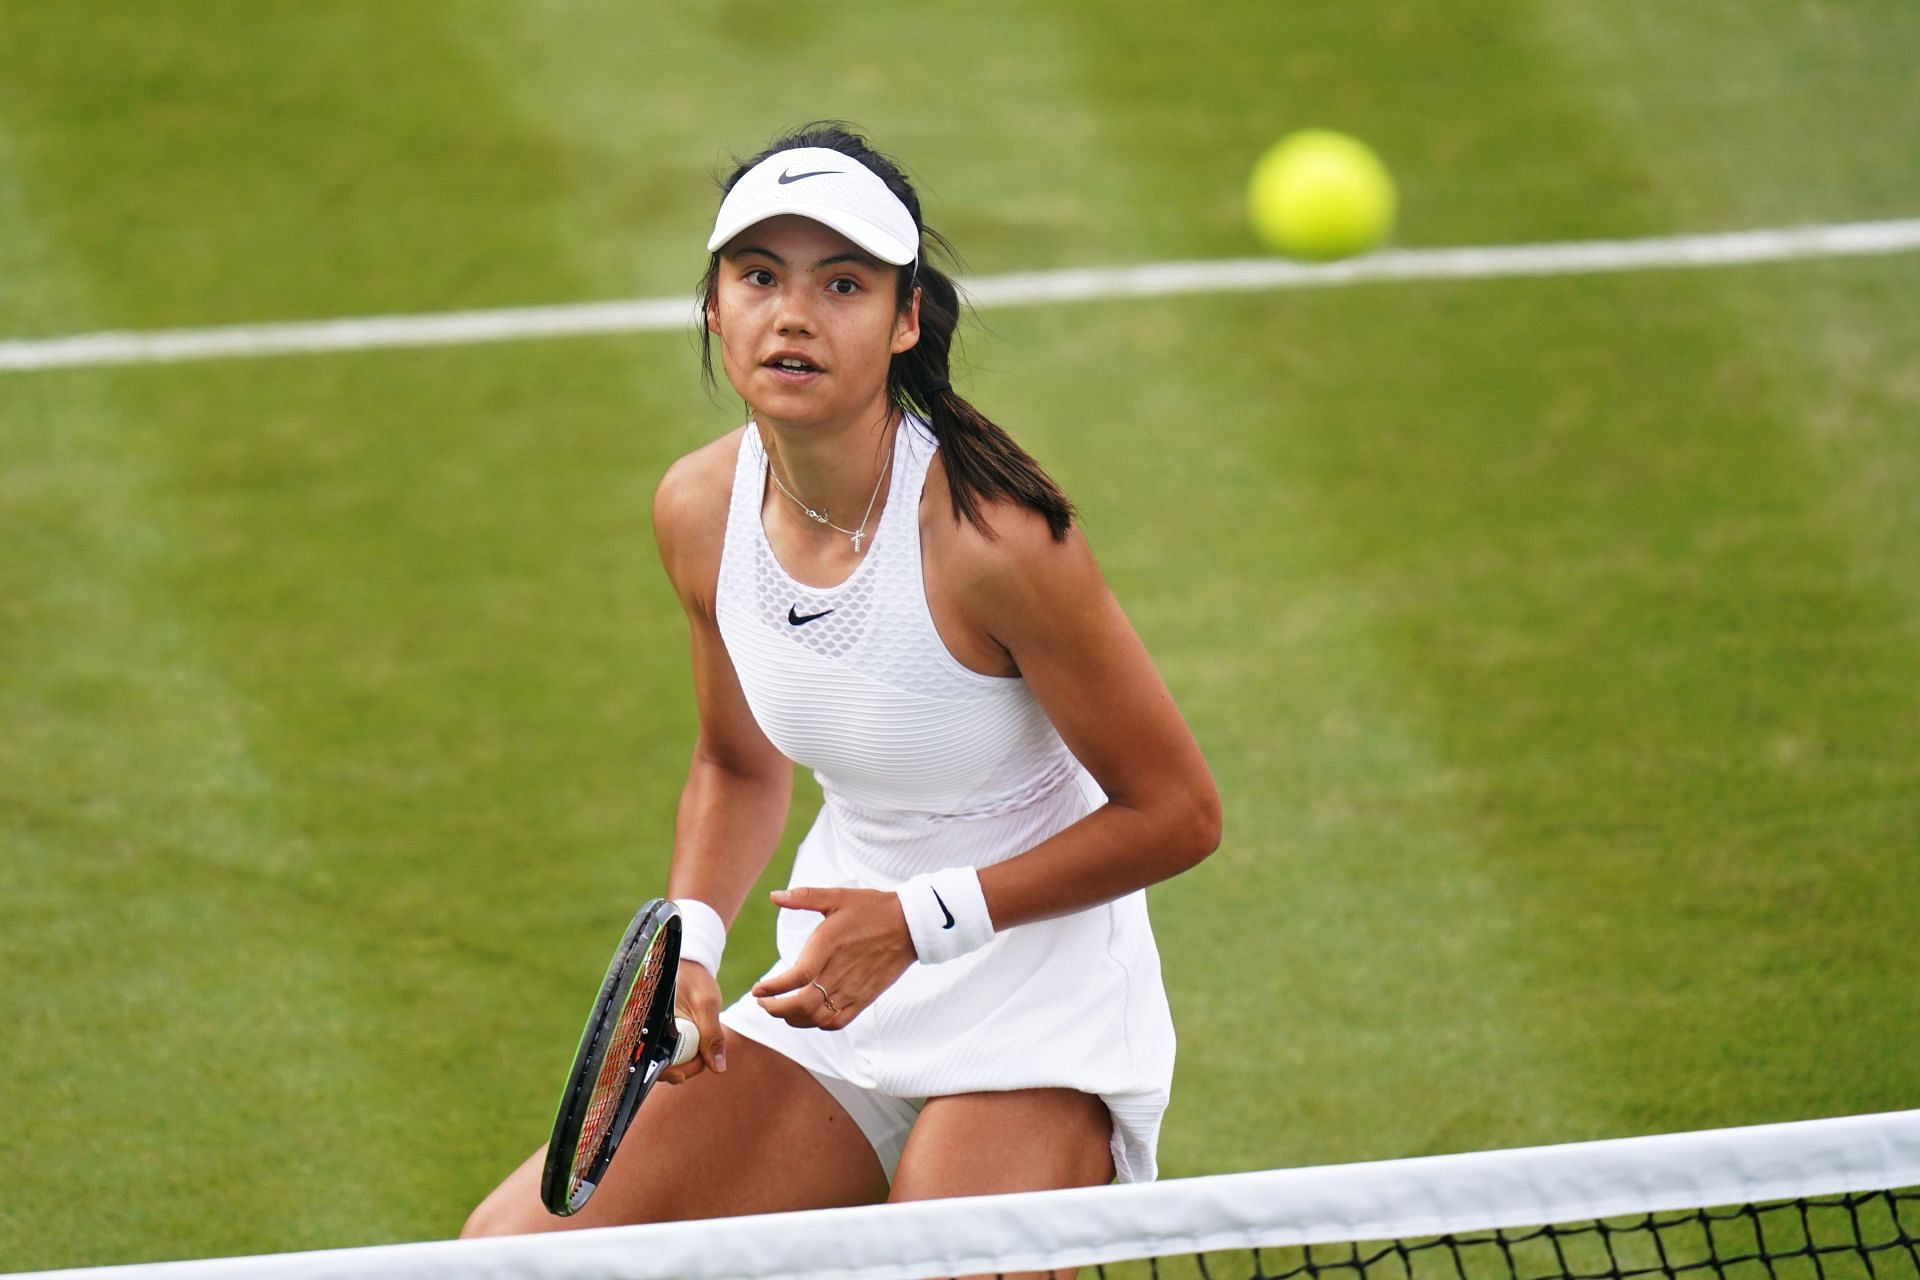 Wimbledon 2022 draw Emma Raducanus projected path to the final